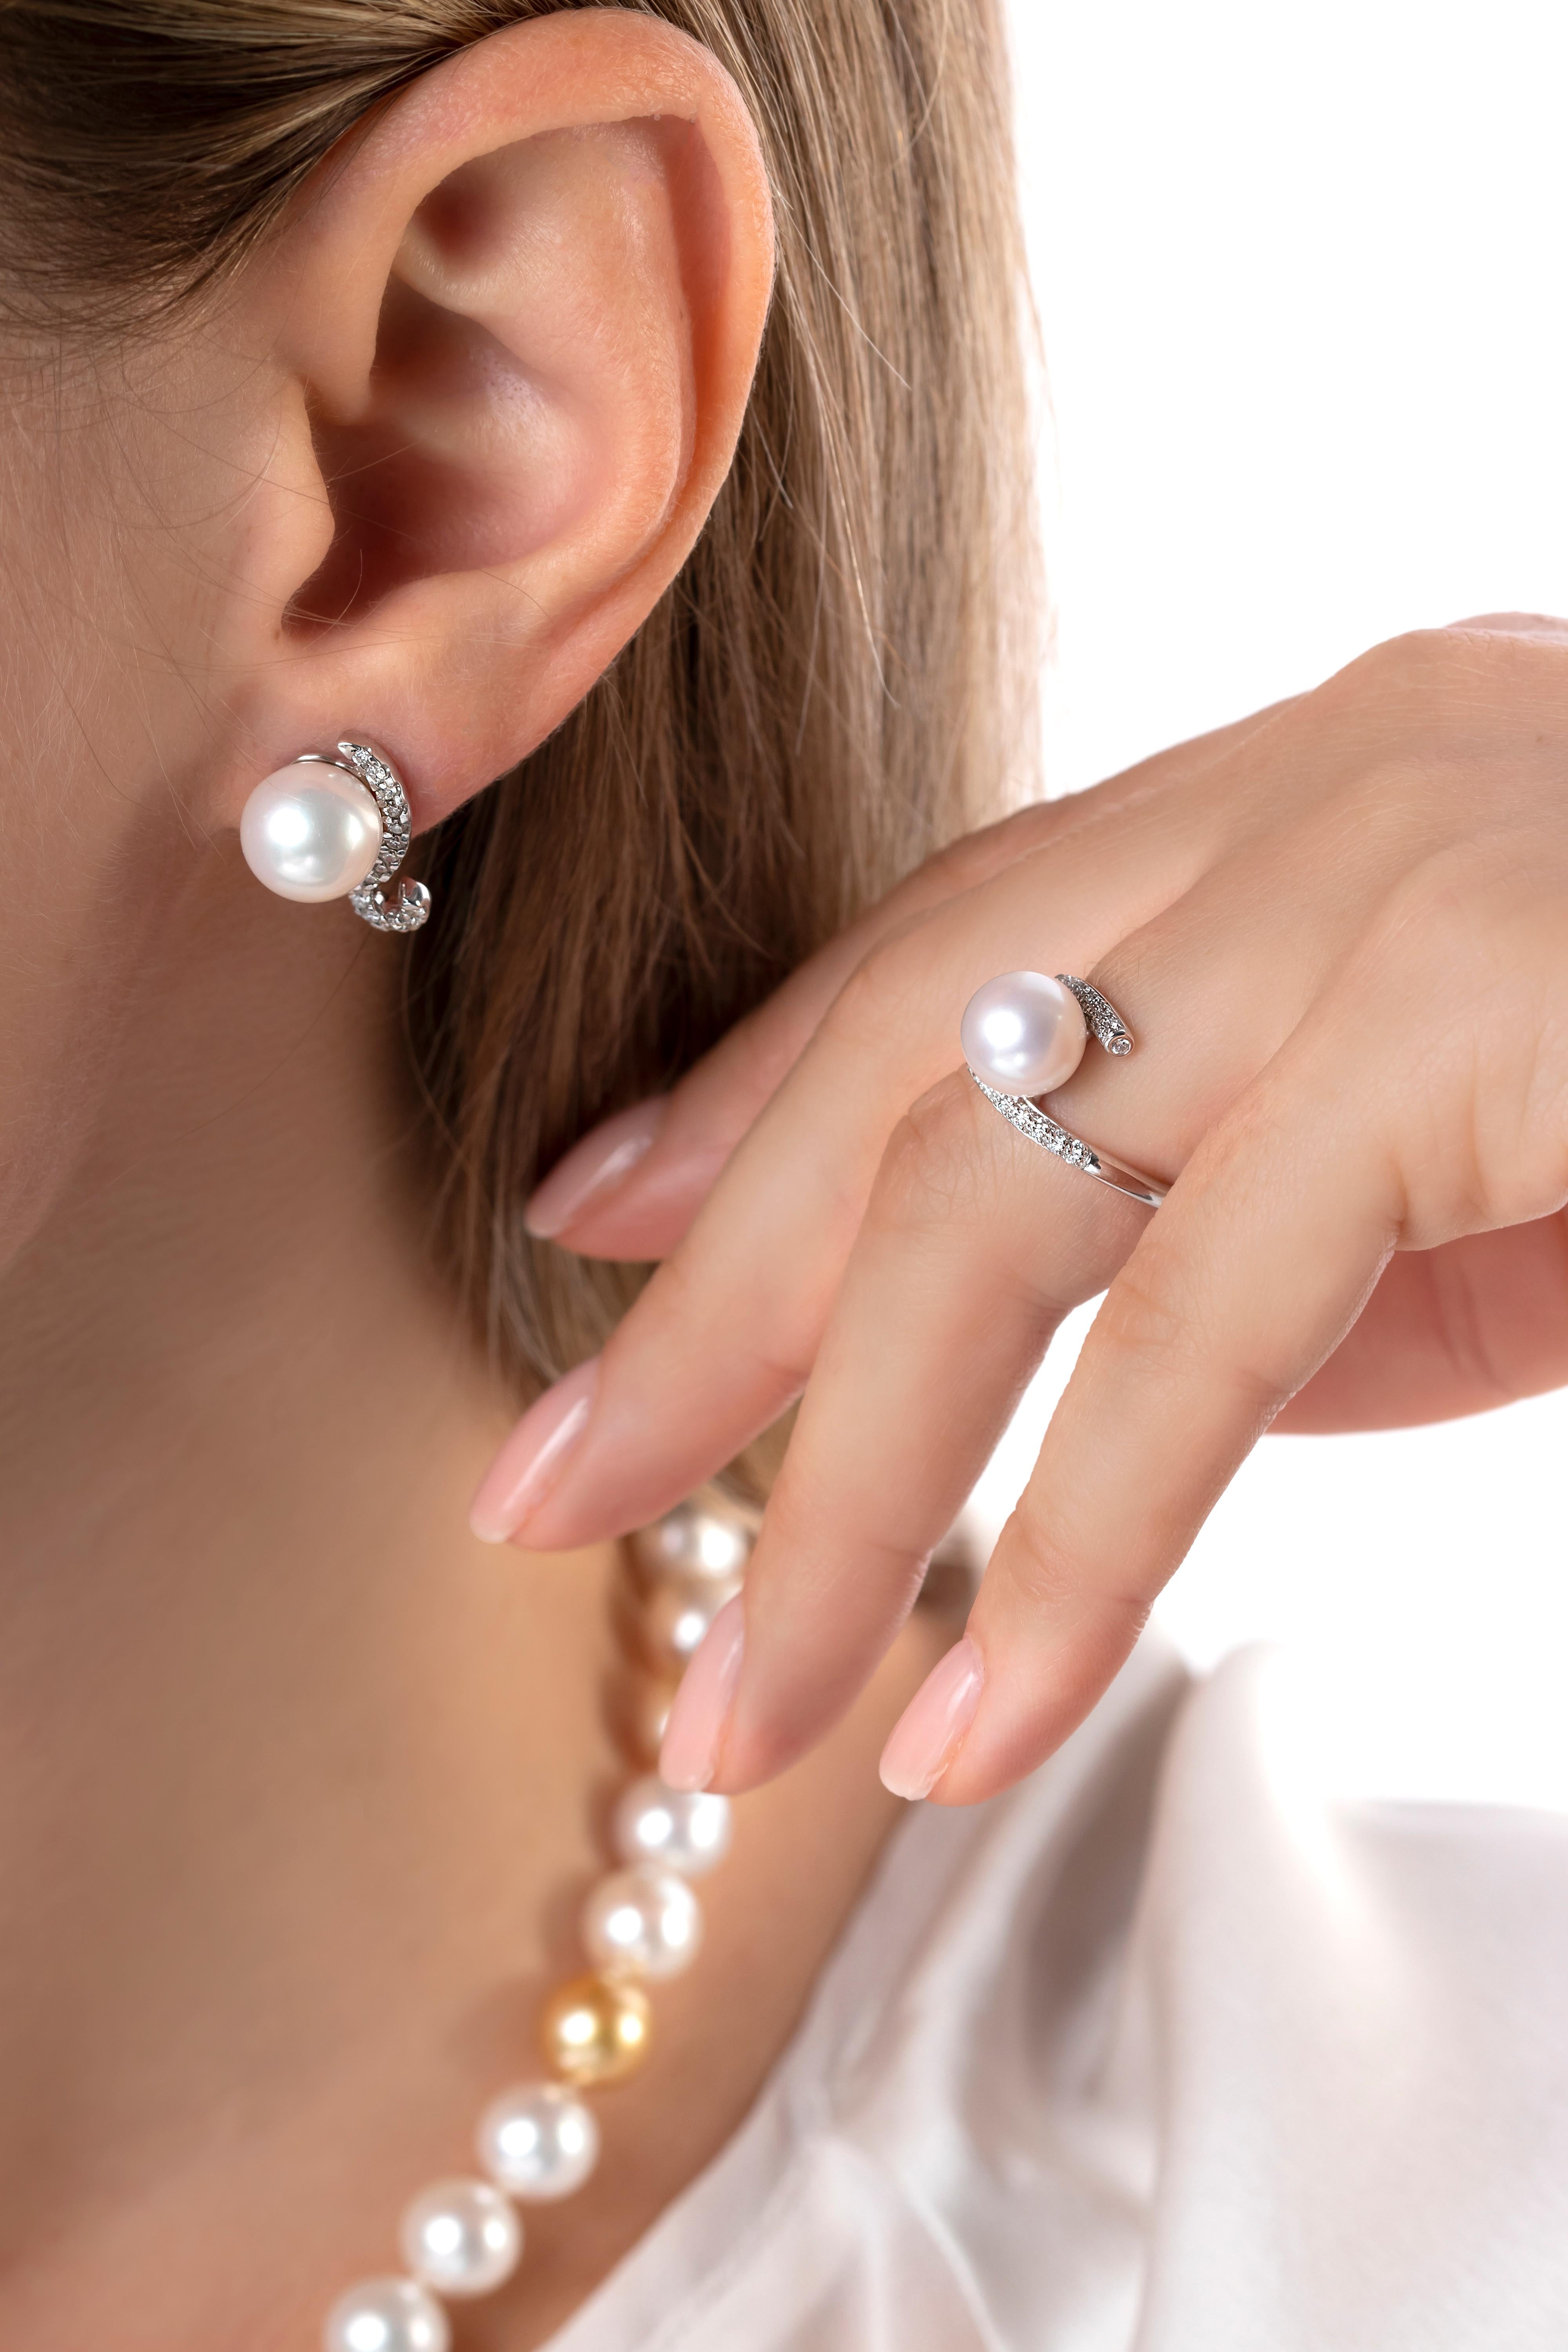 Contemporary Yoko London Freshwater Pearl and Diamond Earrings in 18 Karat White Gold